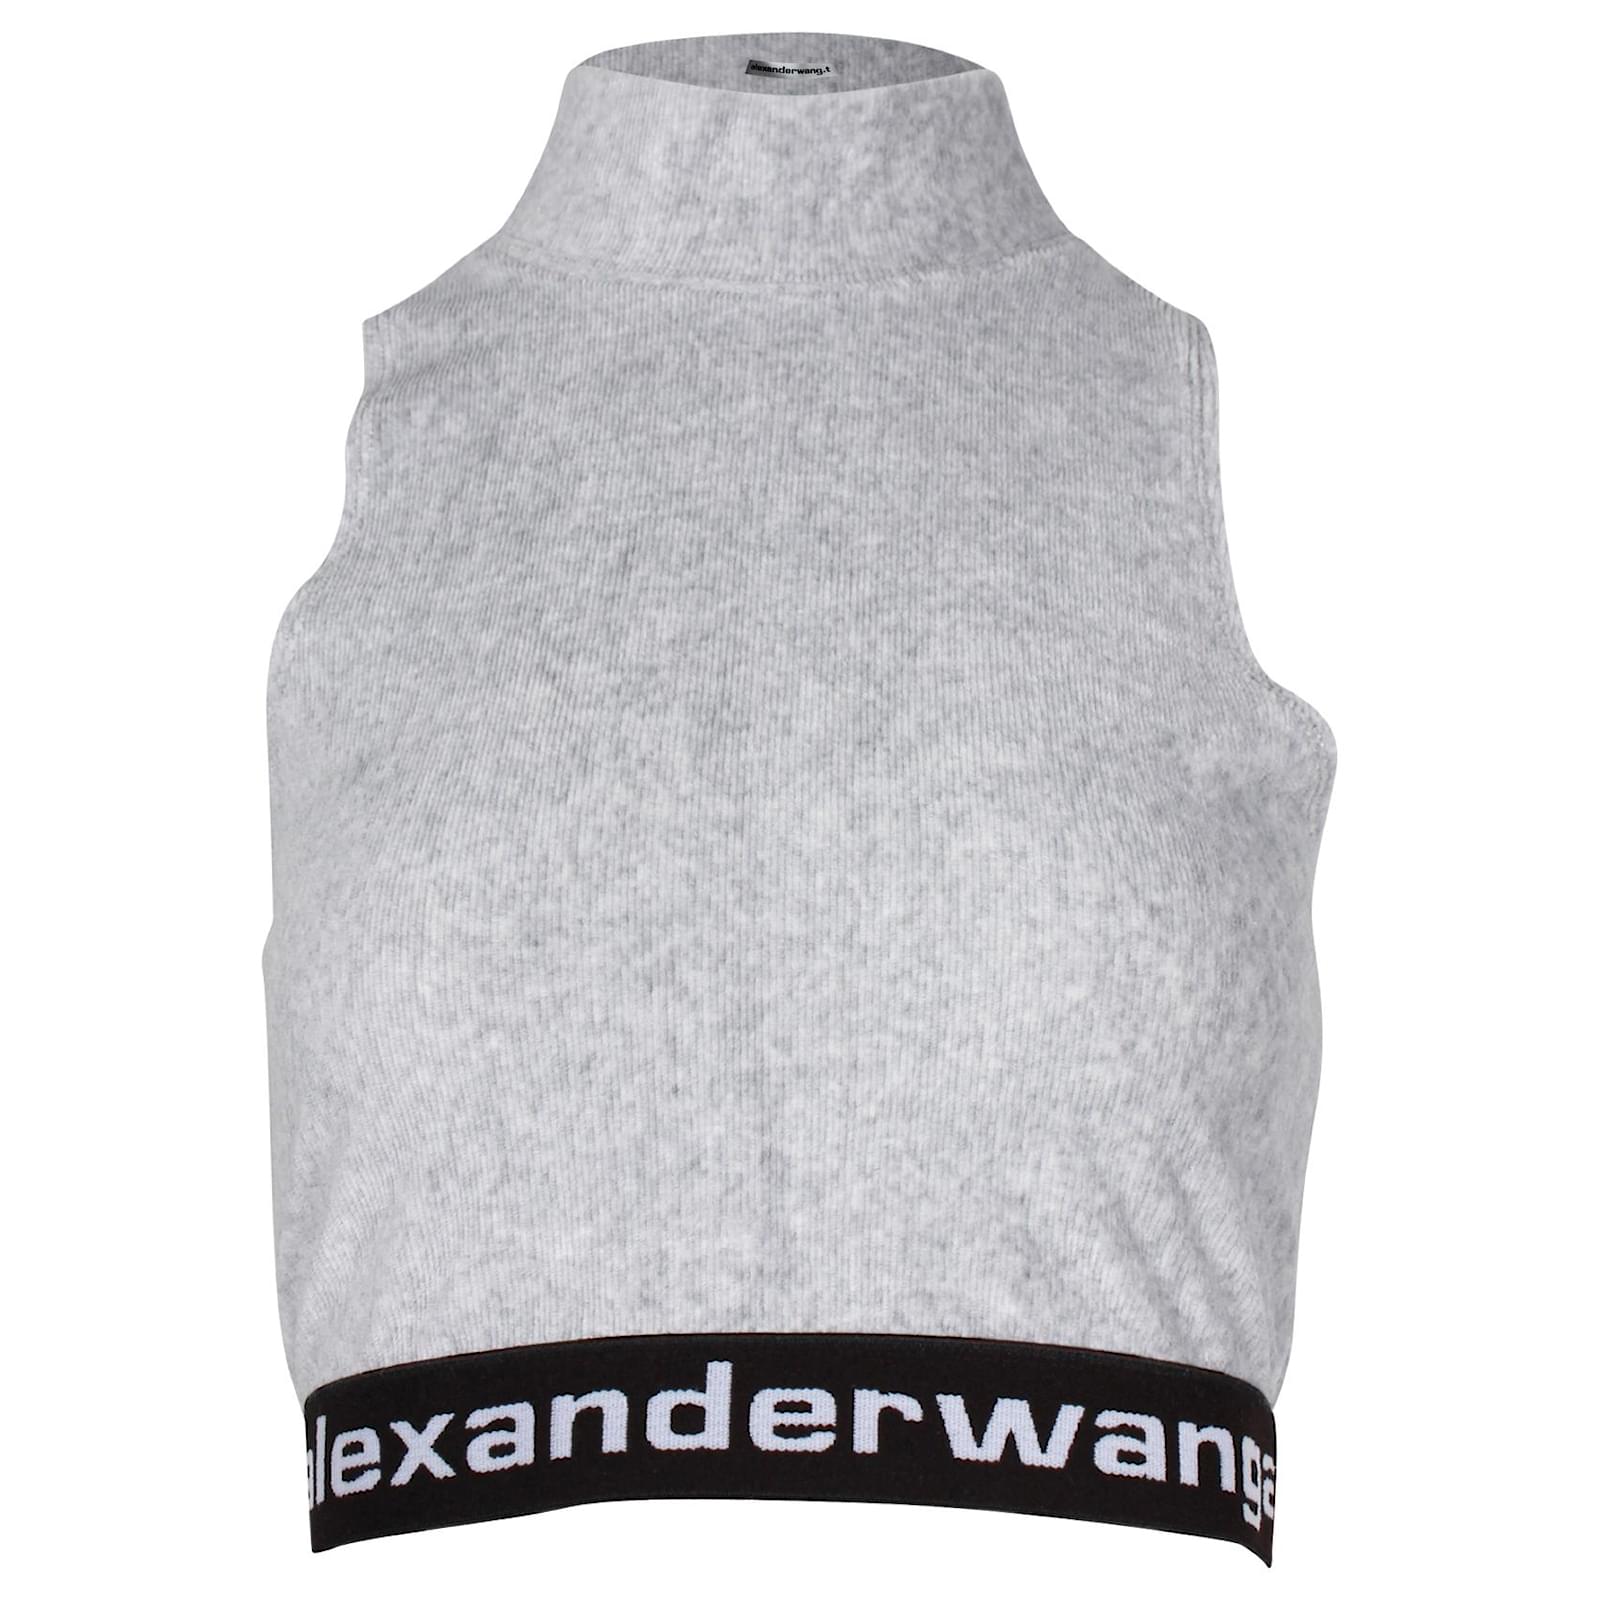 Alexander Wang alexanderwang.t Logo Mock Neck Tank Top in Grey